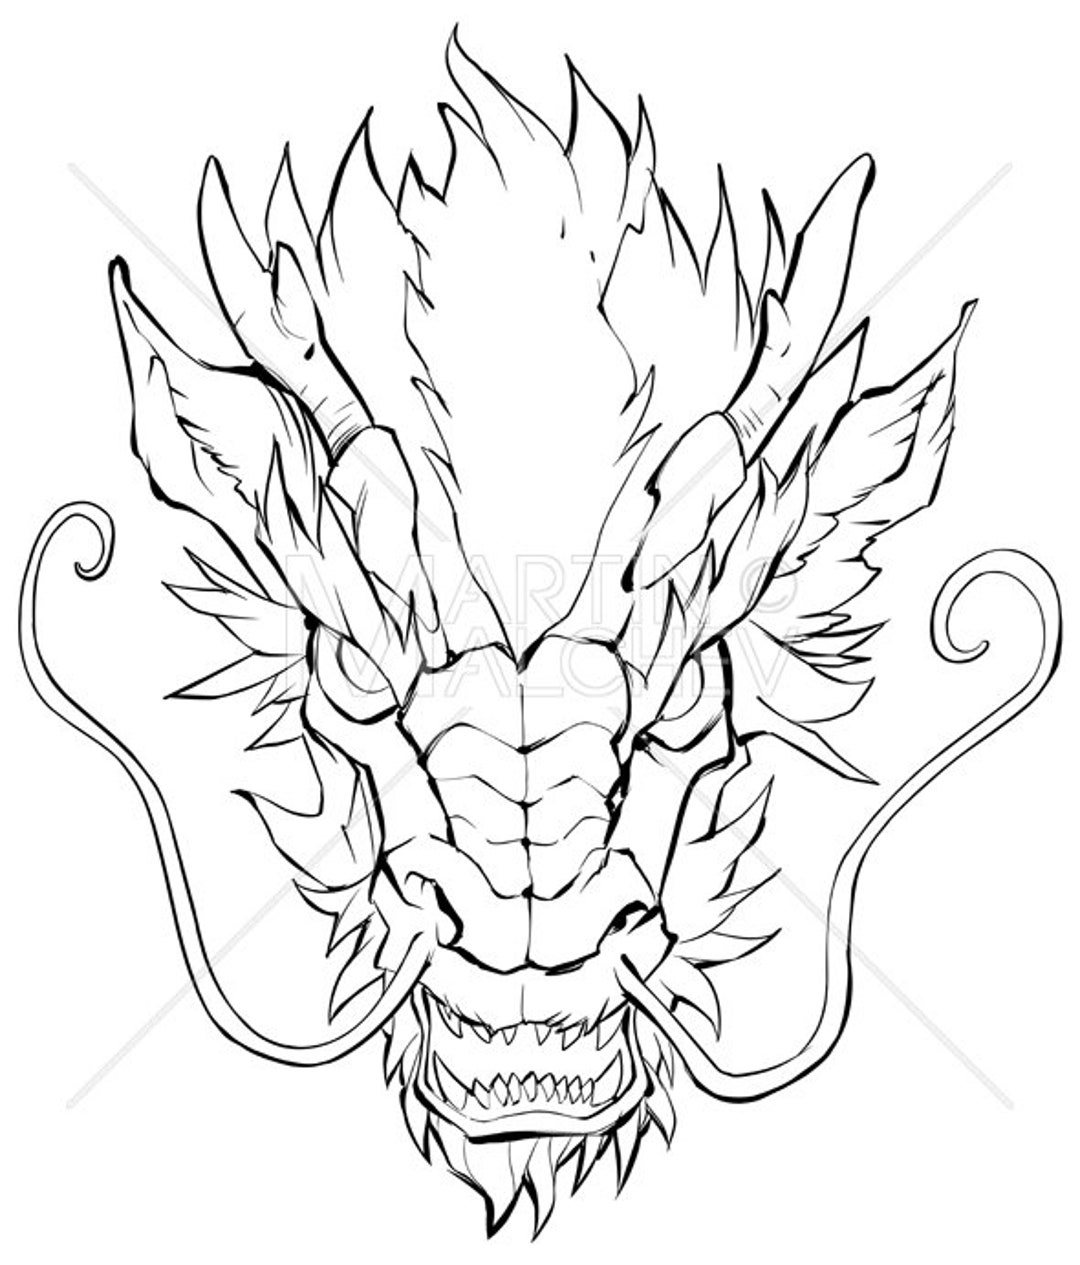 Tête de dragon chinois rouge - illustration - TemplateMonster